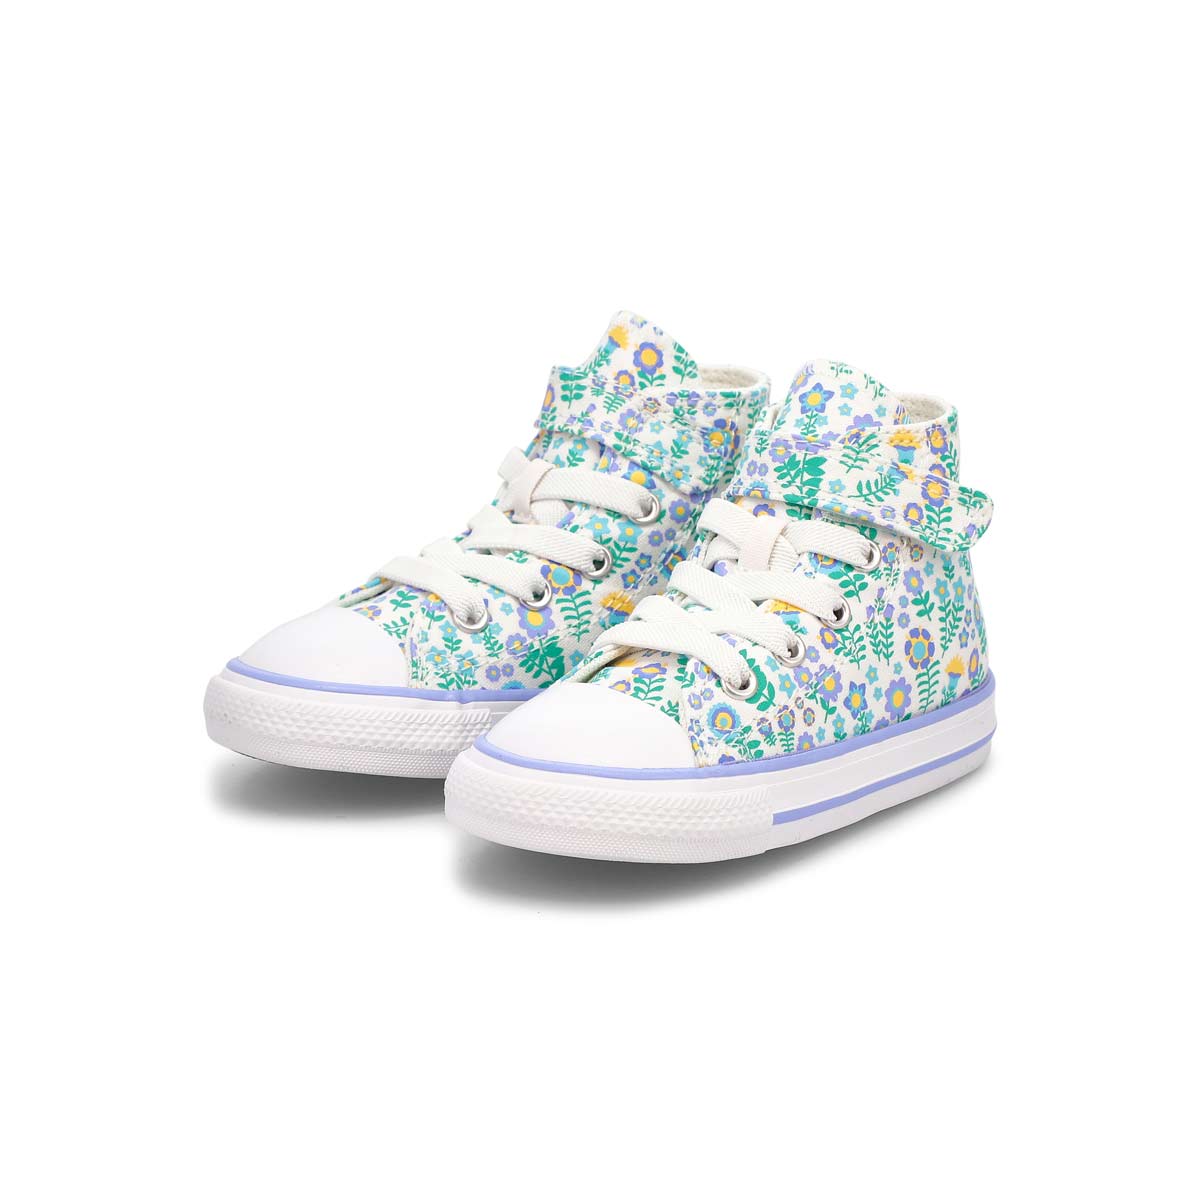 Infants' Chuck Taylor All Star IV Floral sneaker